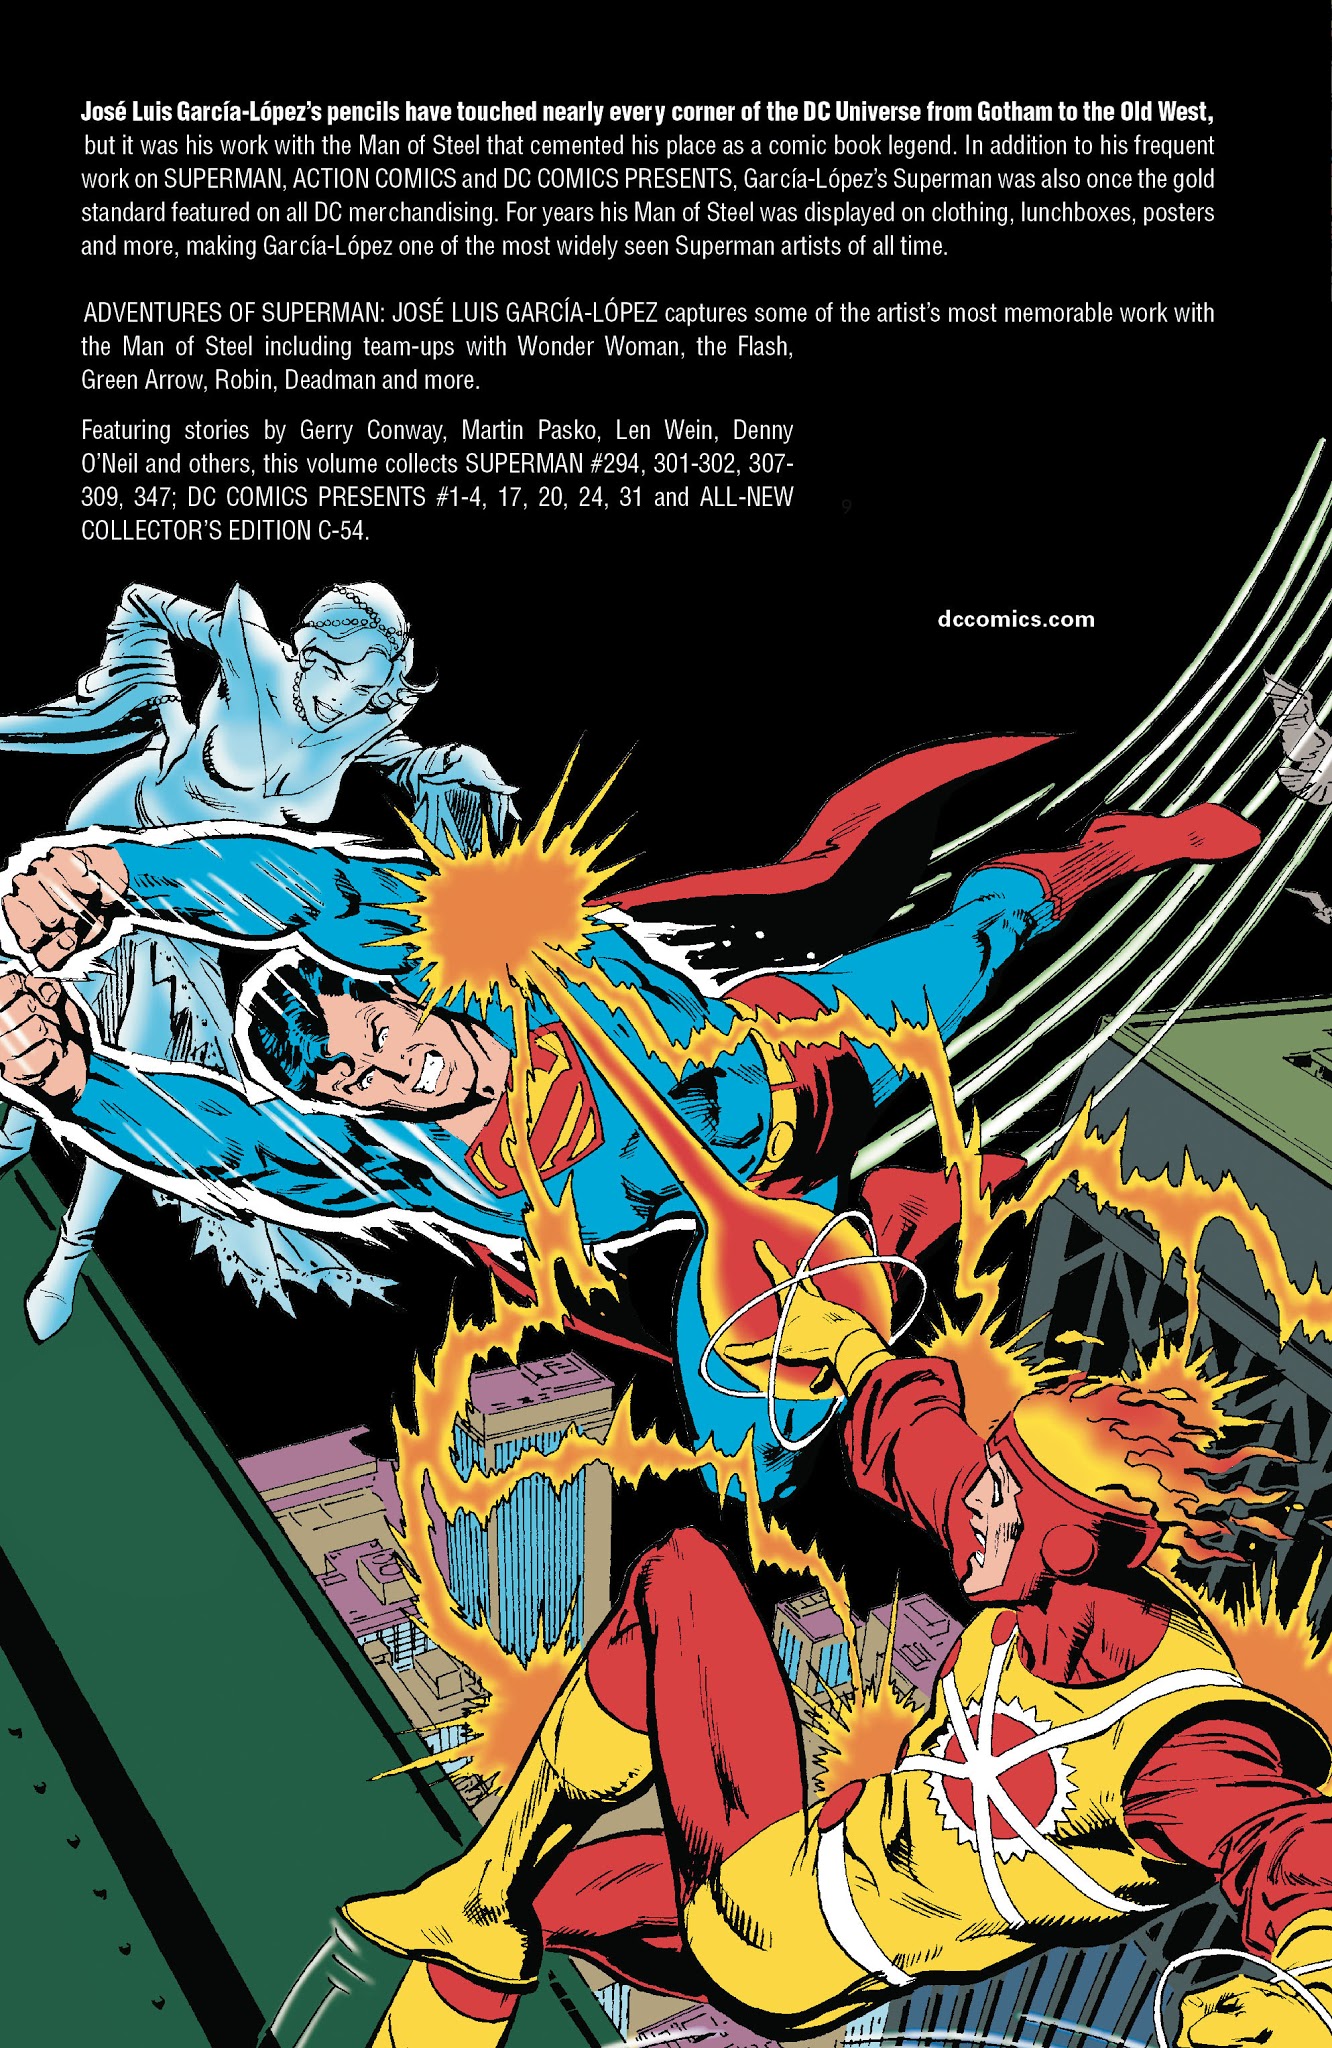 Read online Adventures of Superman: José Luis García-López comic -  Issue # TPB - 2